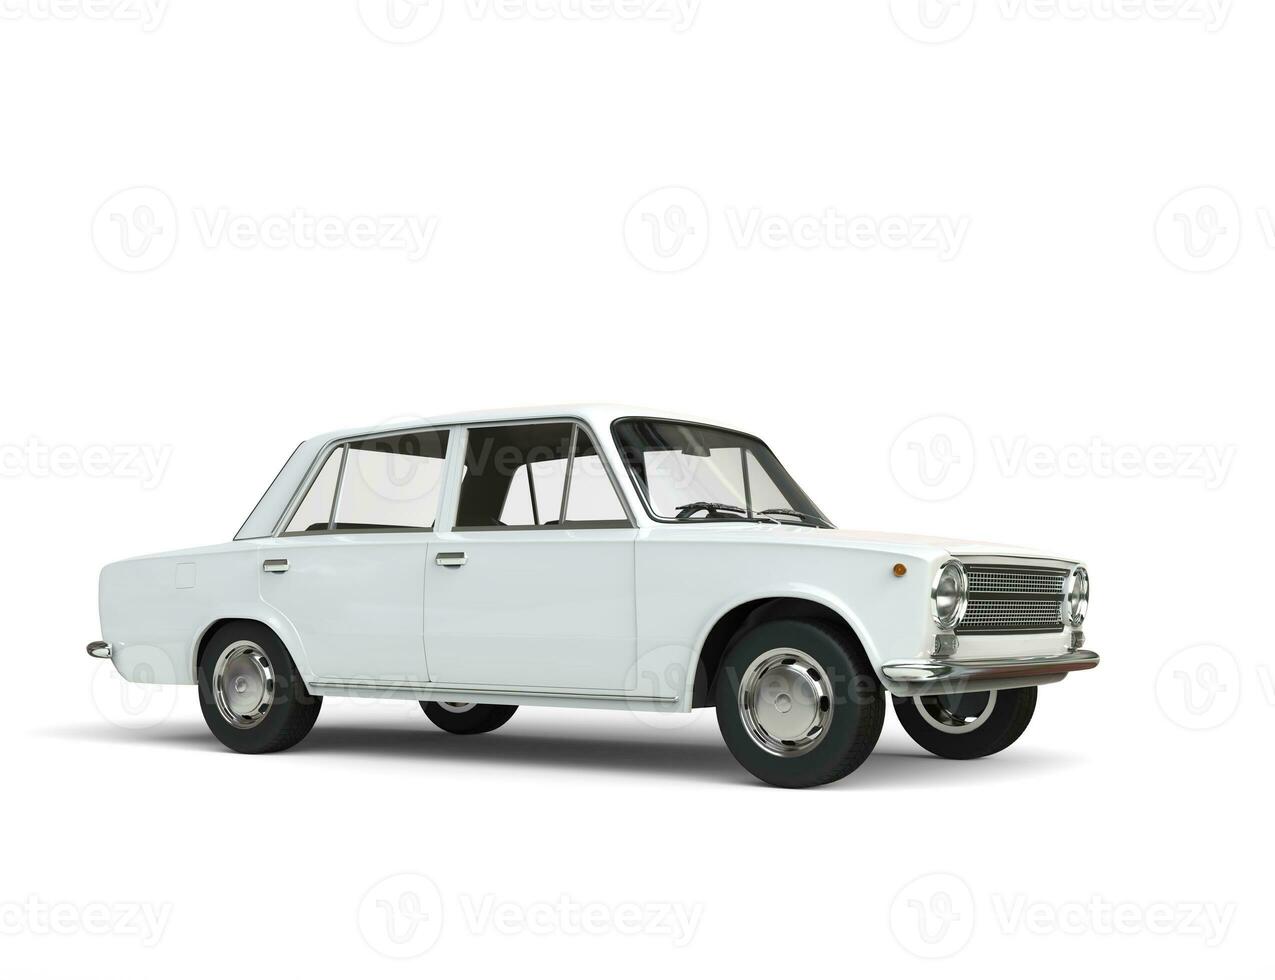 blanco Soviético era Clásico coche foto